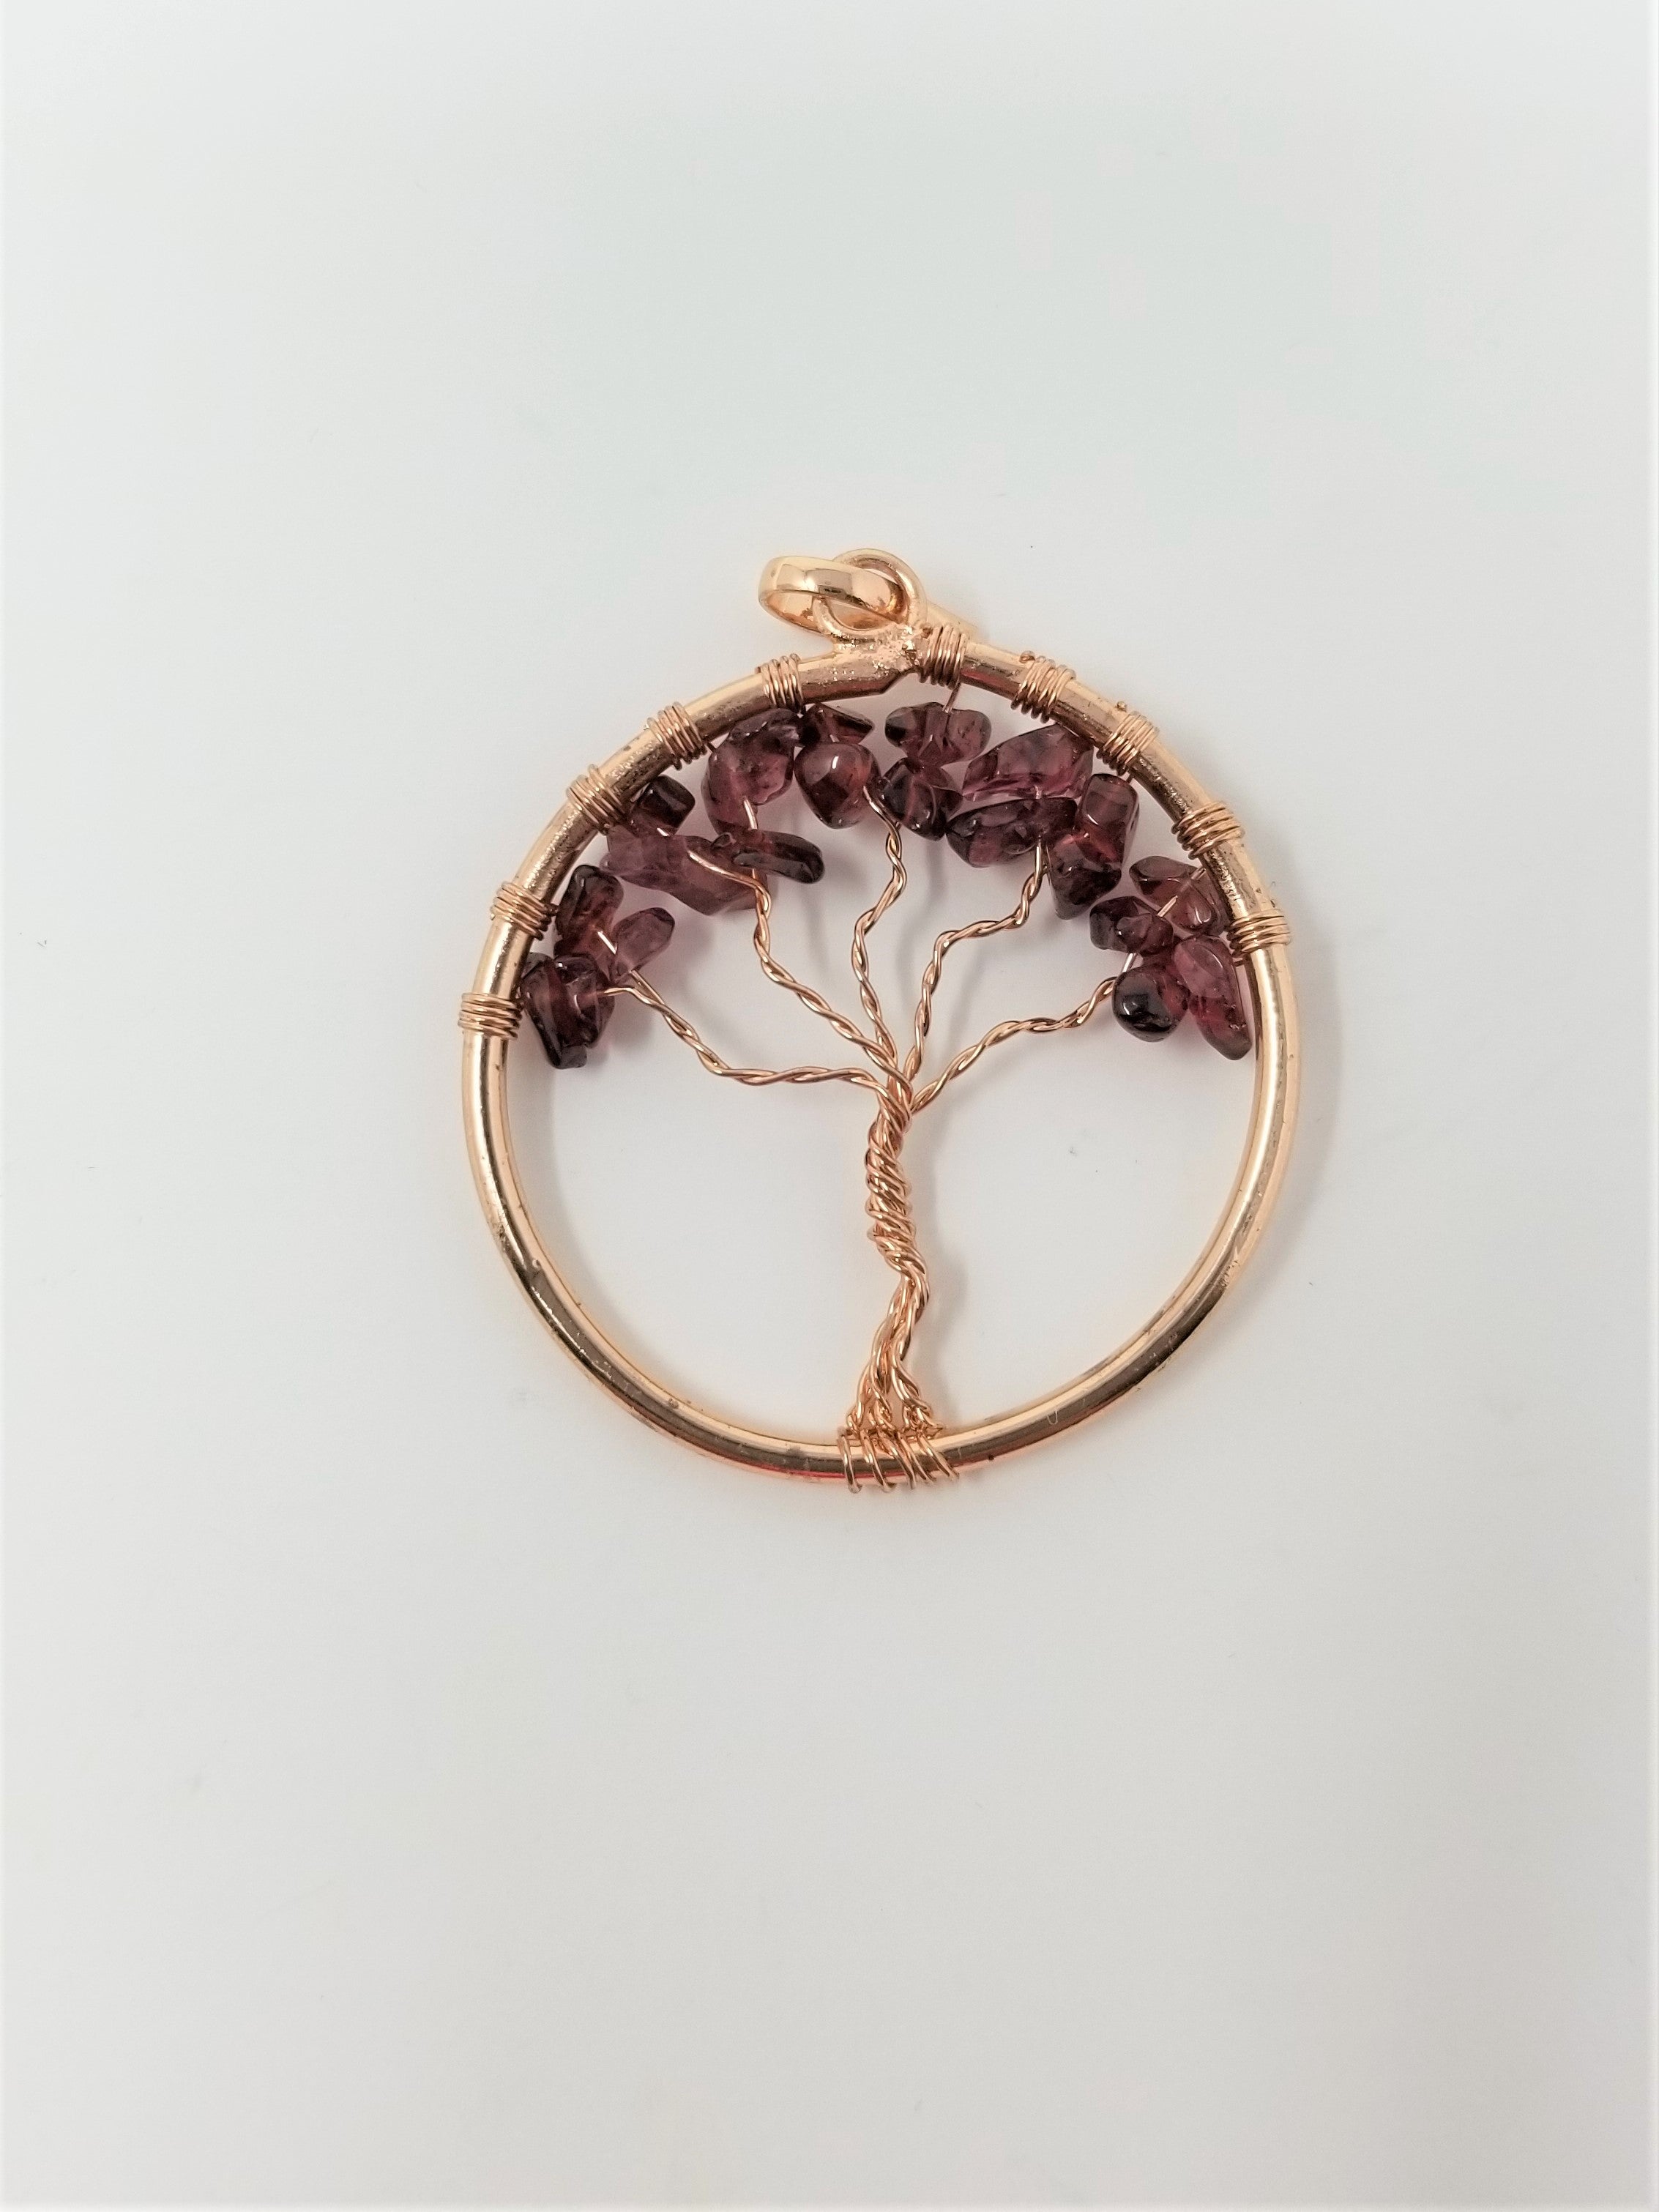 Tree of Life Pendant in Rose Gold Moonstone, Tiger eye, Apatite,Topaz, Tourmaline, Rose Quartz, Peridot